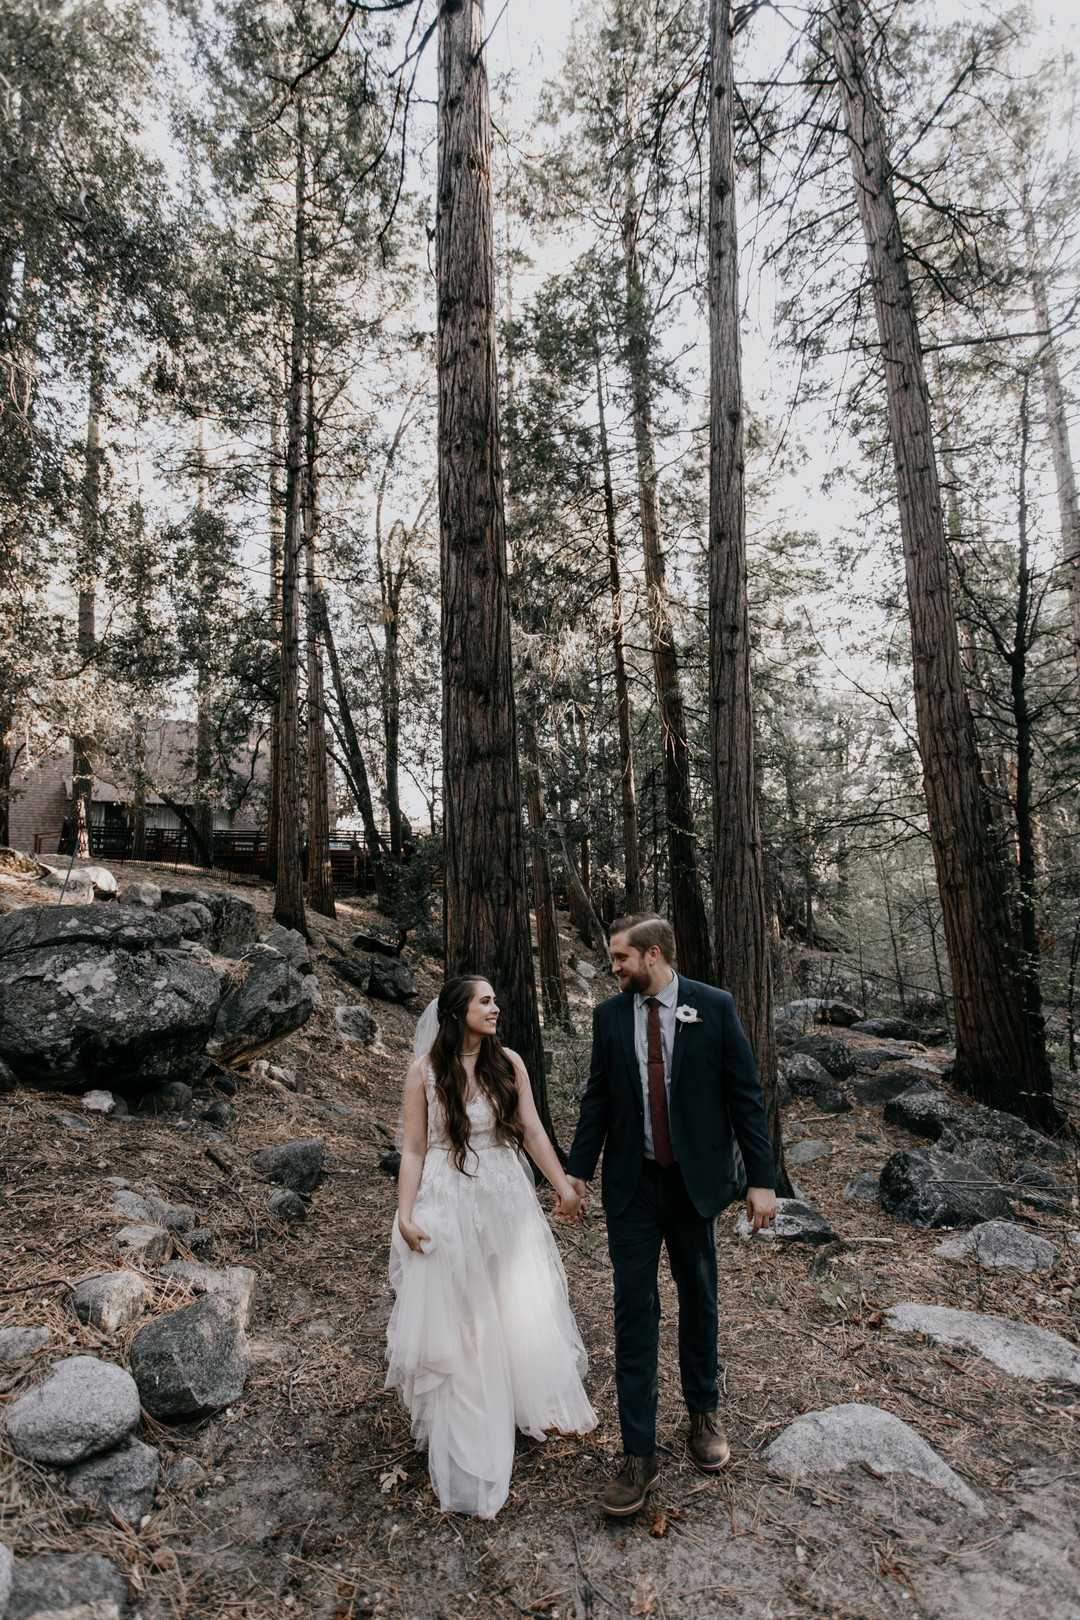 Bride + Groom | Intimate Rustic Forest Wedding